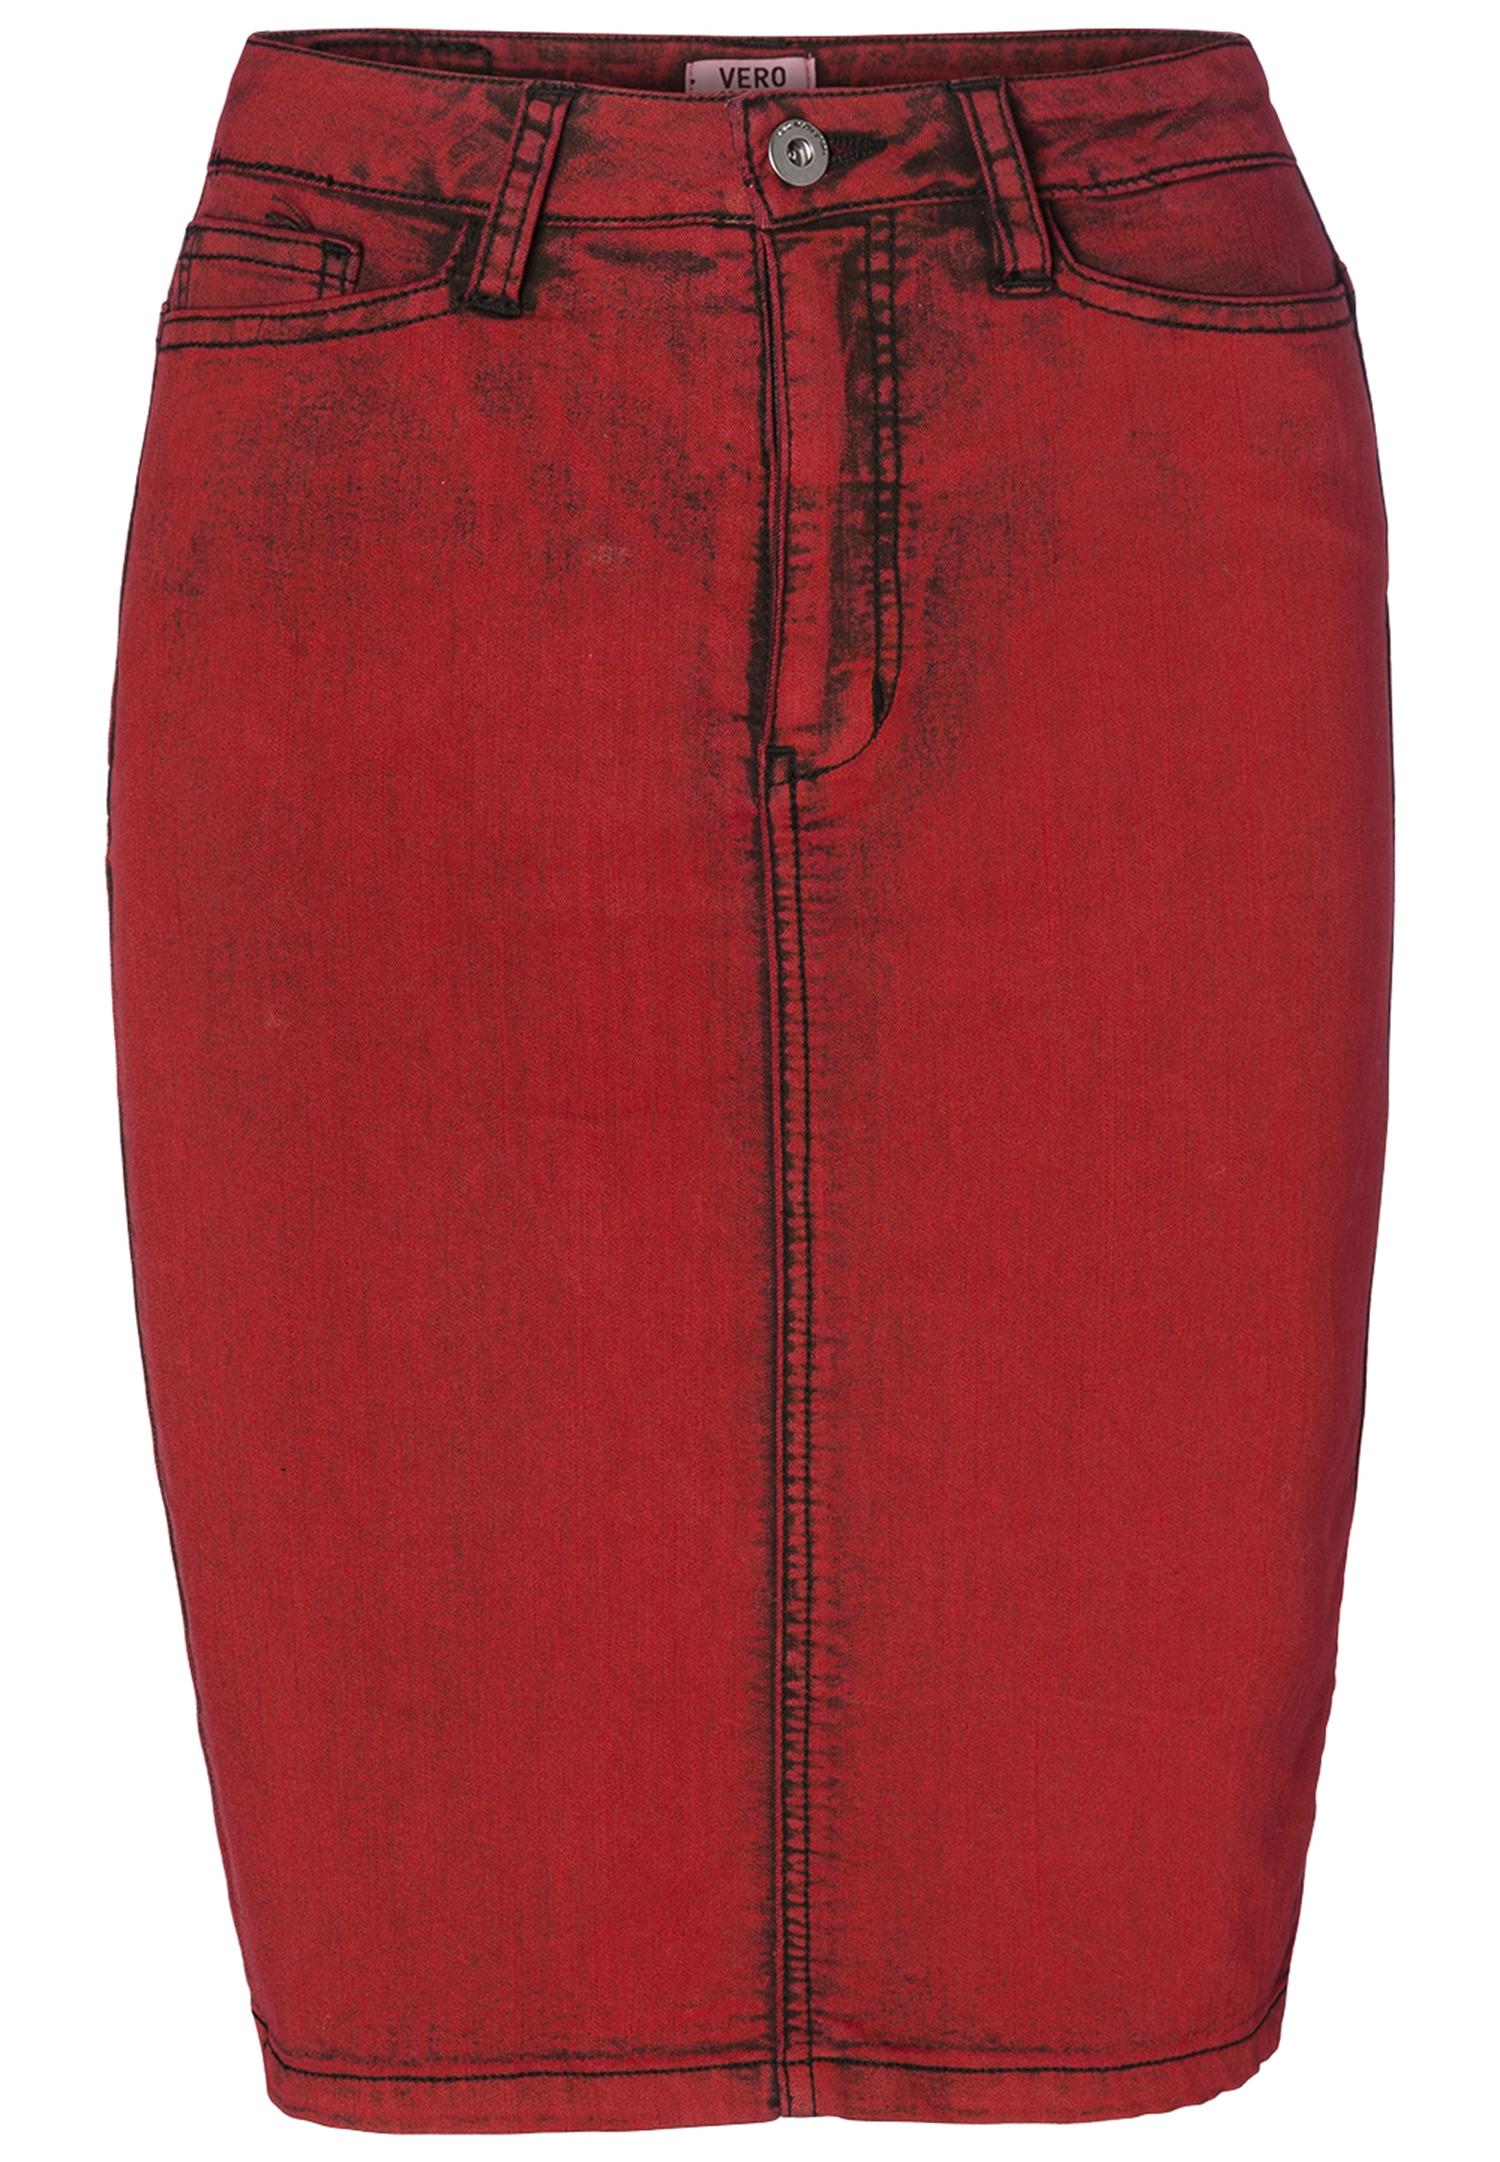 Jupe rouge - Vero Moda - 39,95 €